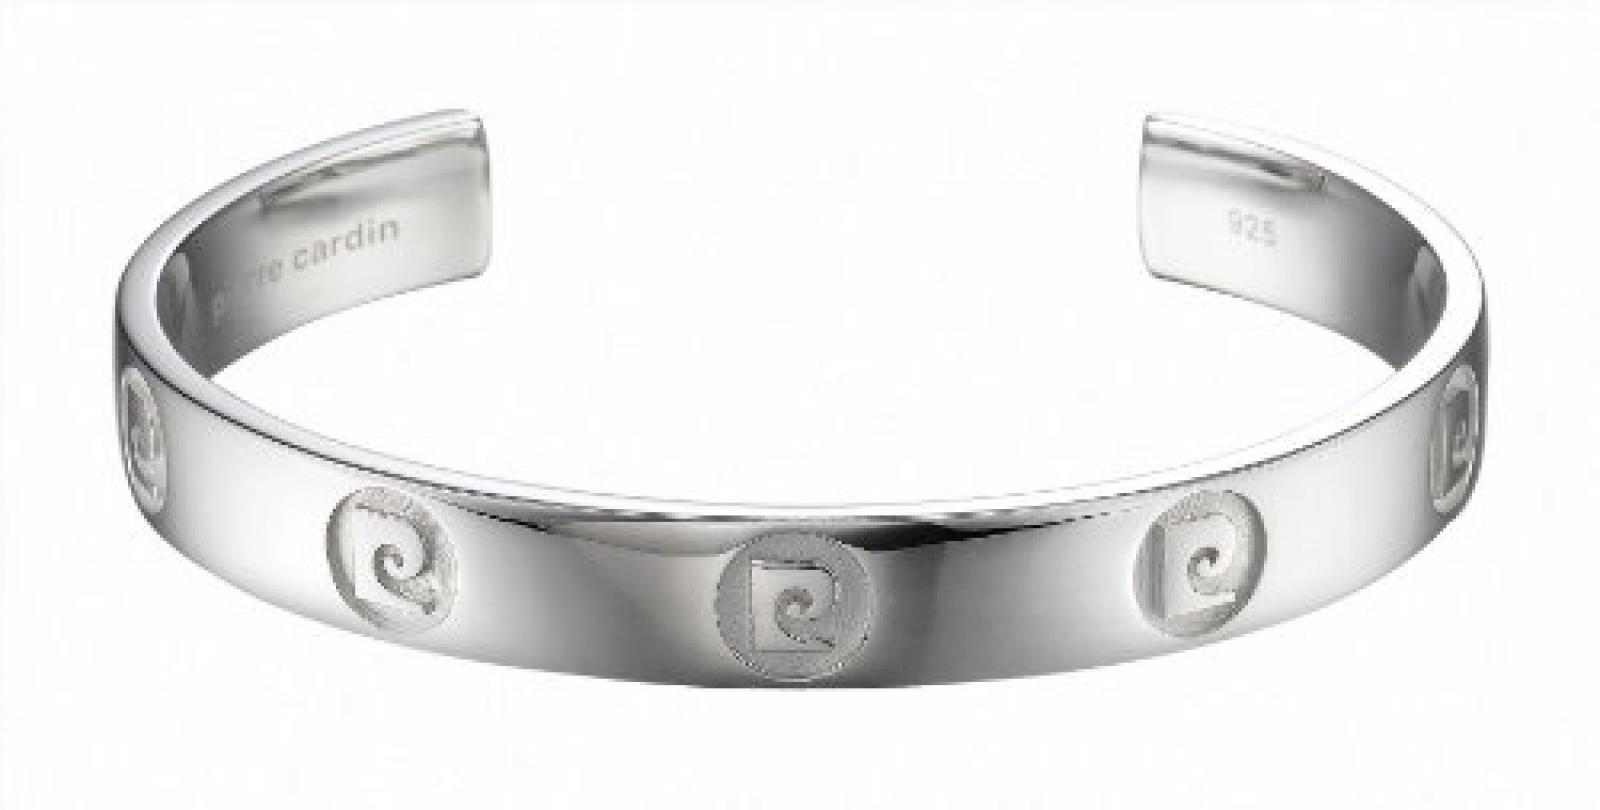 Pierre Cardin Damen-Armband Authentique Sterling-Silber 925 63 Millimeters PCBA-90035.A.63 